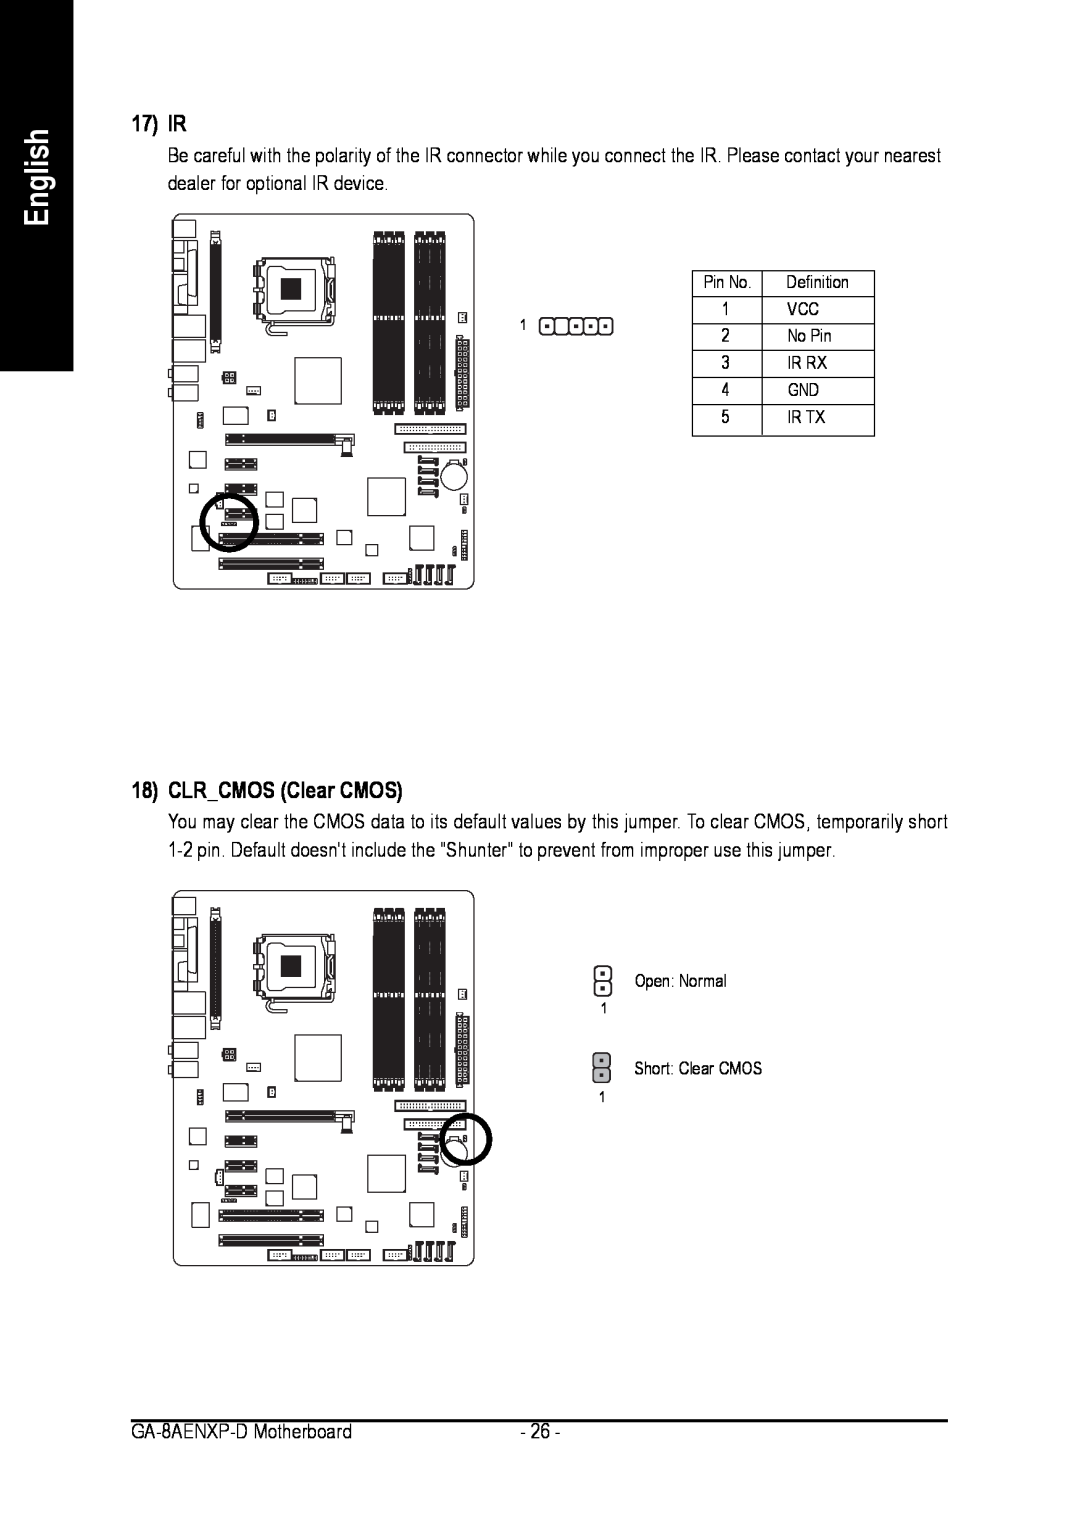 Gigabyte GA-8AENXP-D user manual 17 IR, CLRCMOS Clear CMOS, English 